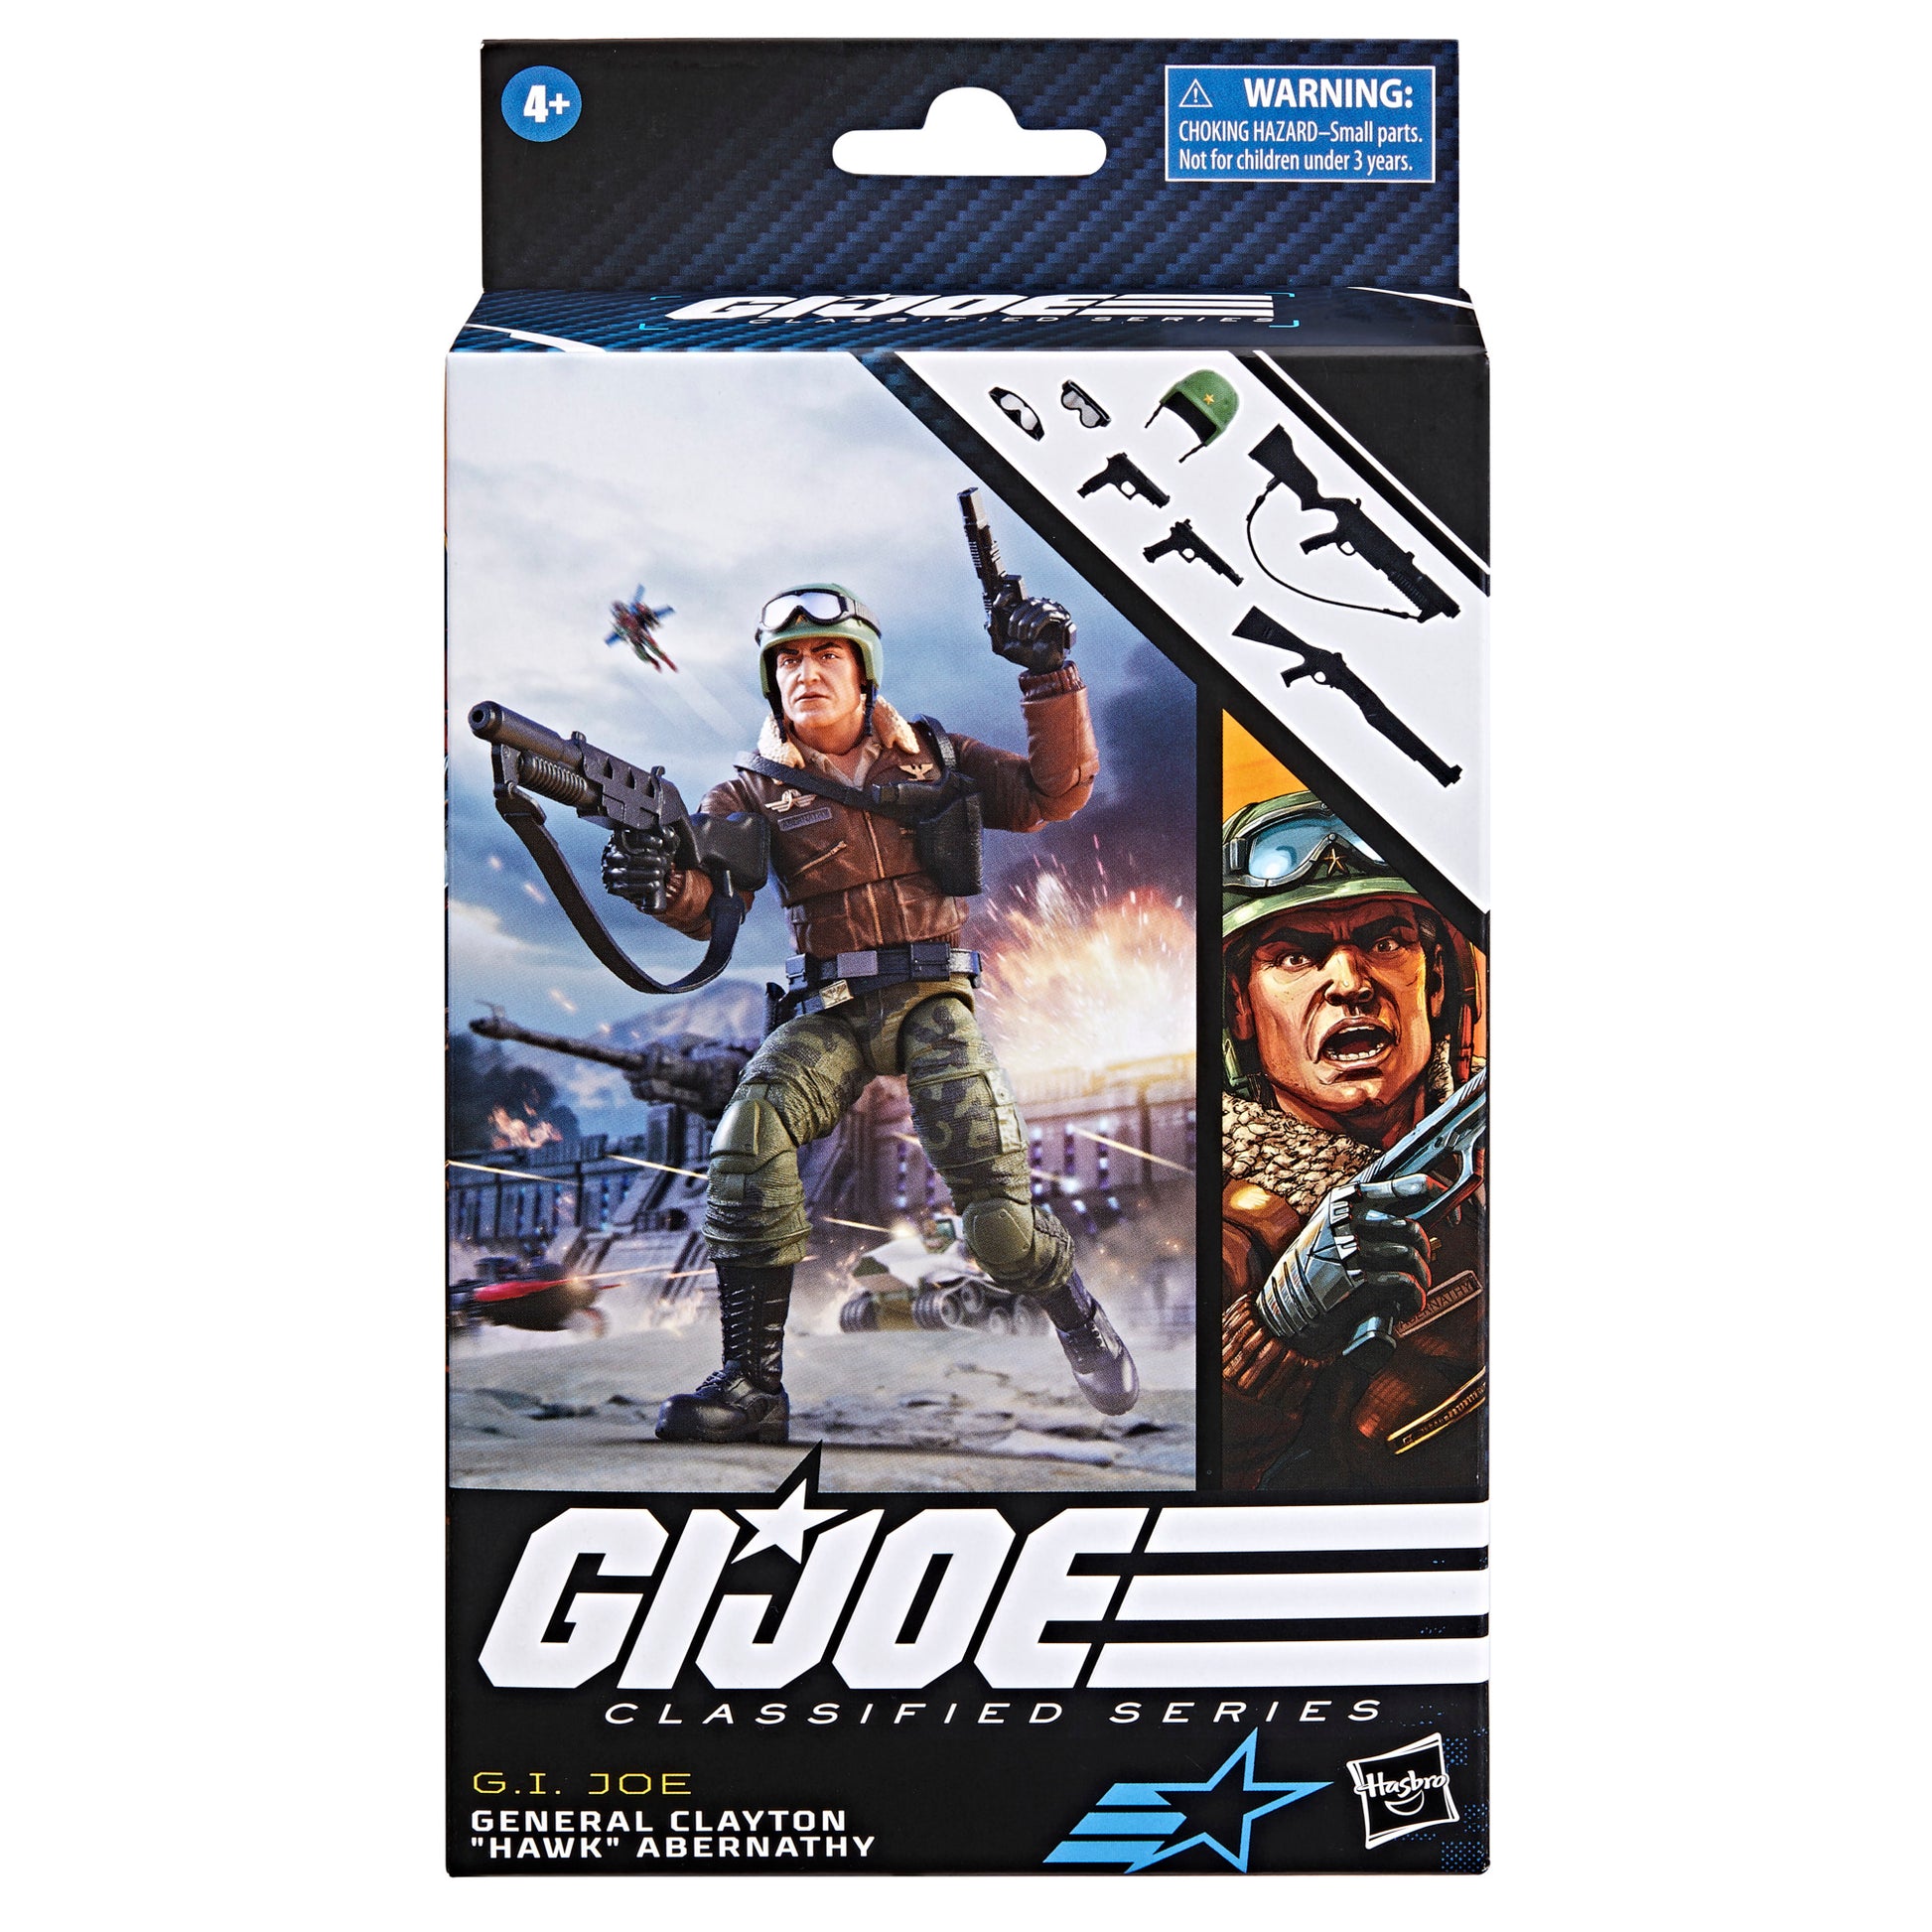 G.I. Joe Classified Series General Clayton "Hawk" Abernathy, Collectible G.I. Joe Action Figure (6"), 103 3